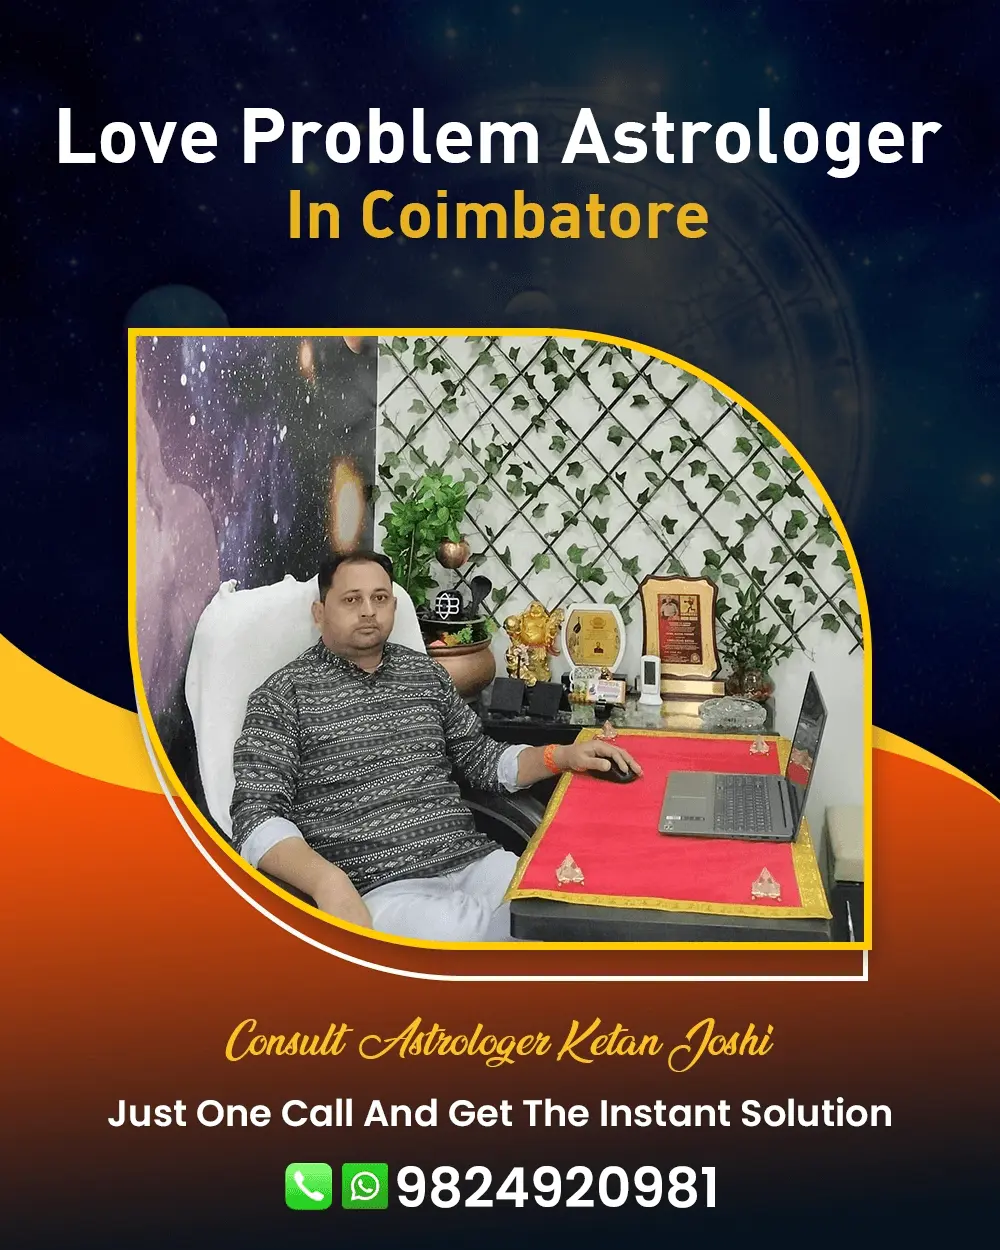 Love Problem Astrologer In Coimbatore